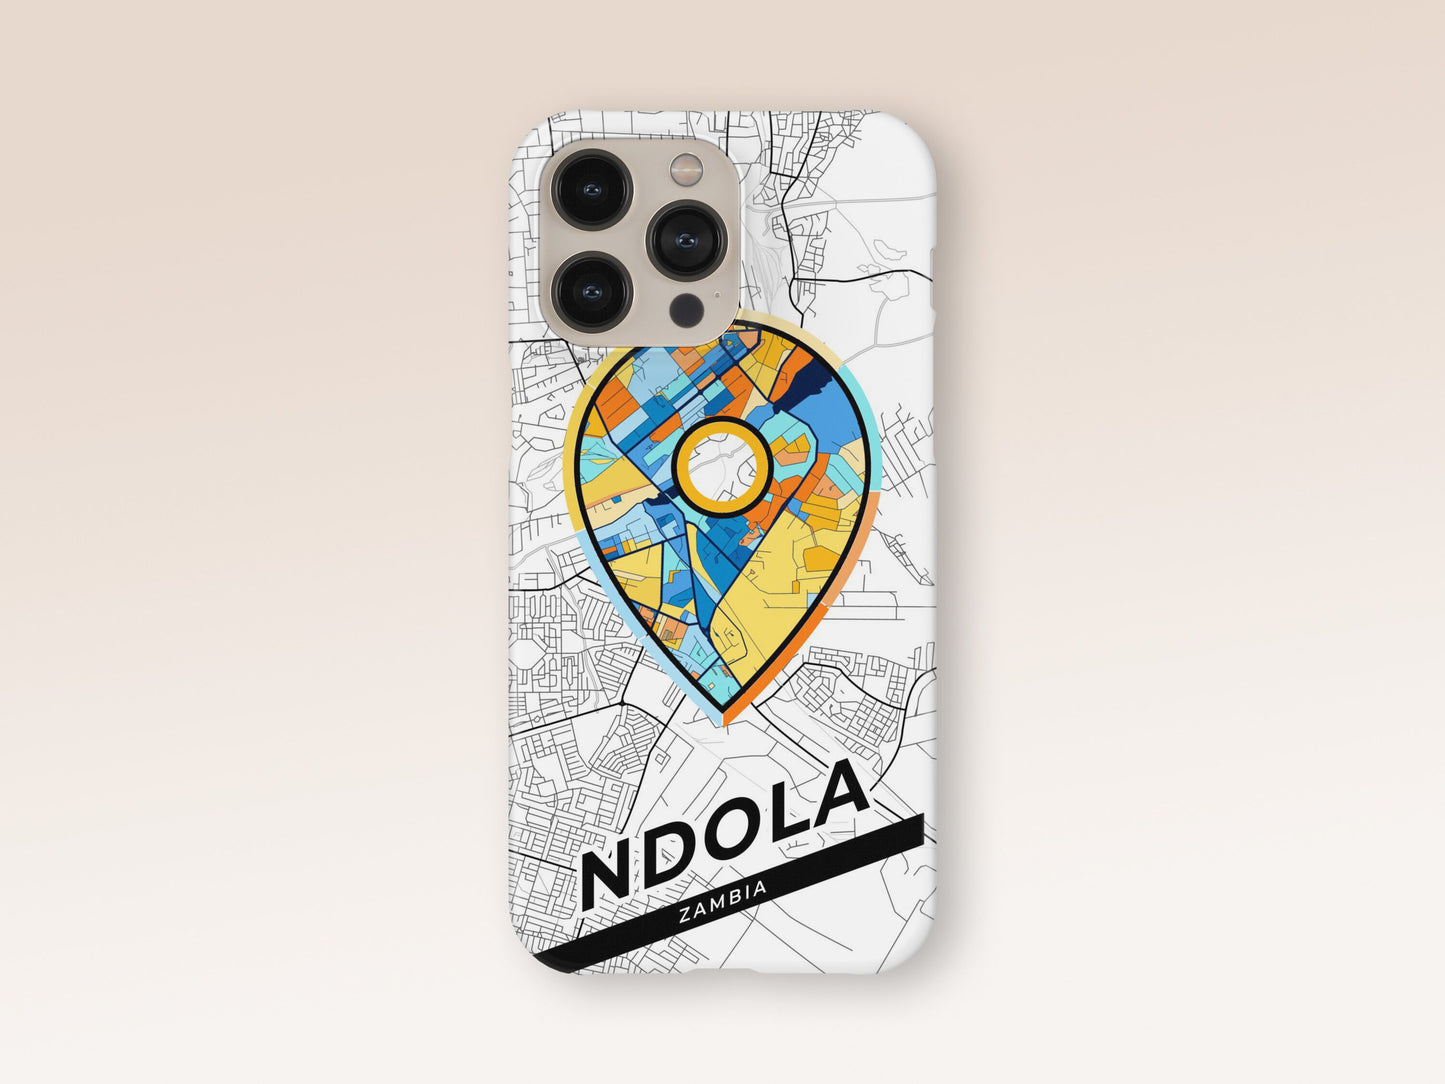 Ndola Zambia slim phone case with colorful icon 1